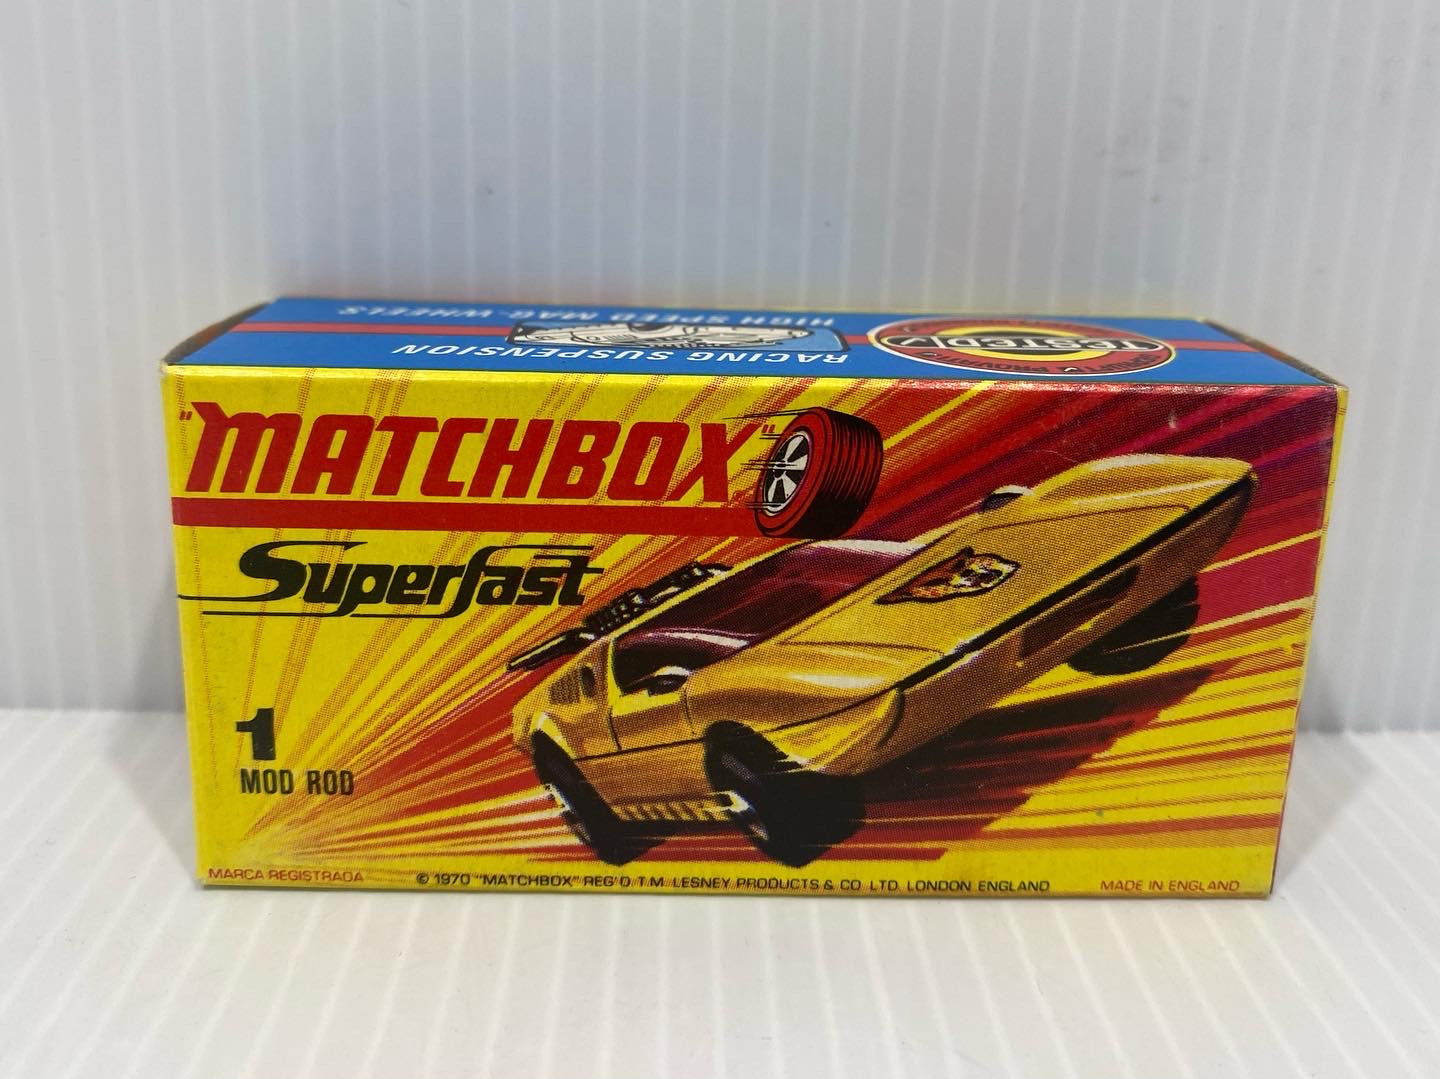 Mod Rod - Matchbox MB01/RN01 1971-1975. With original box